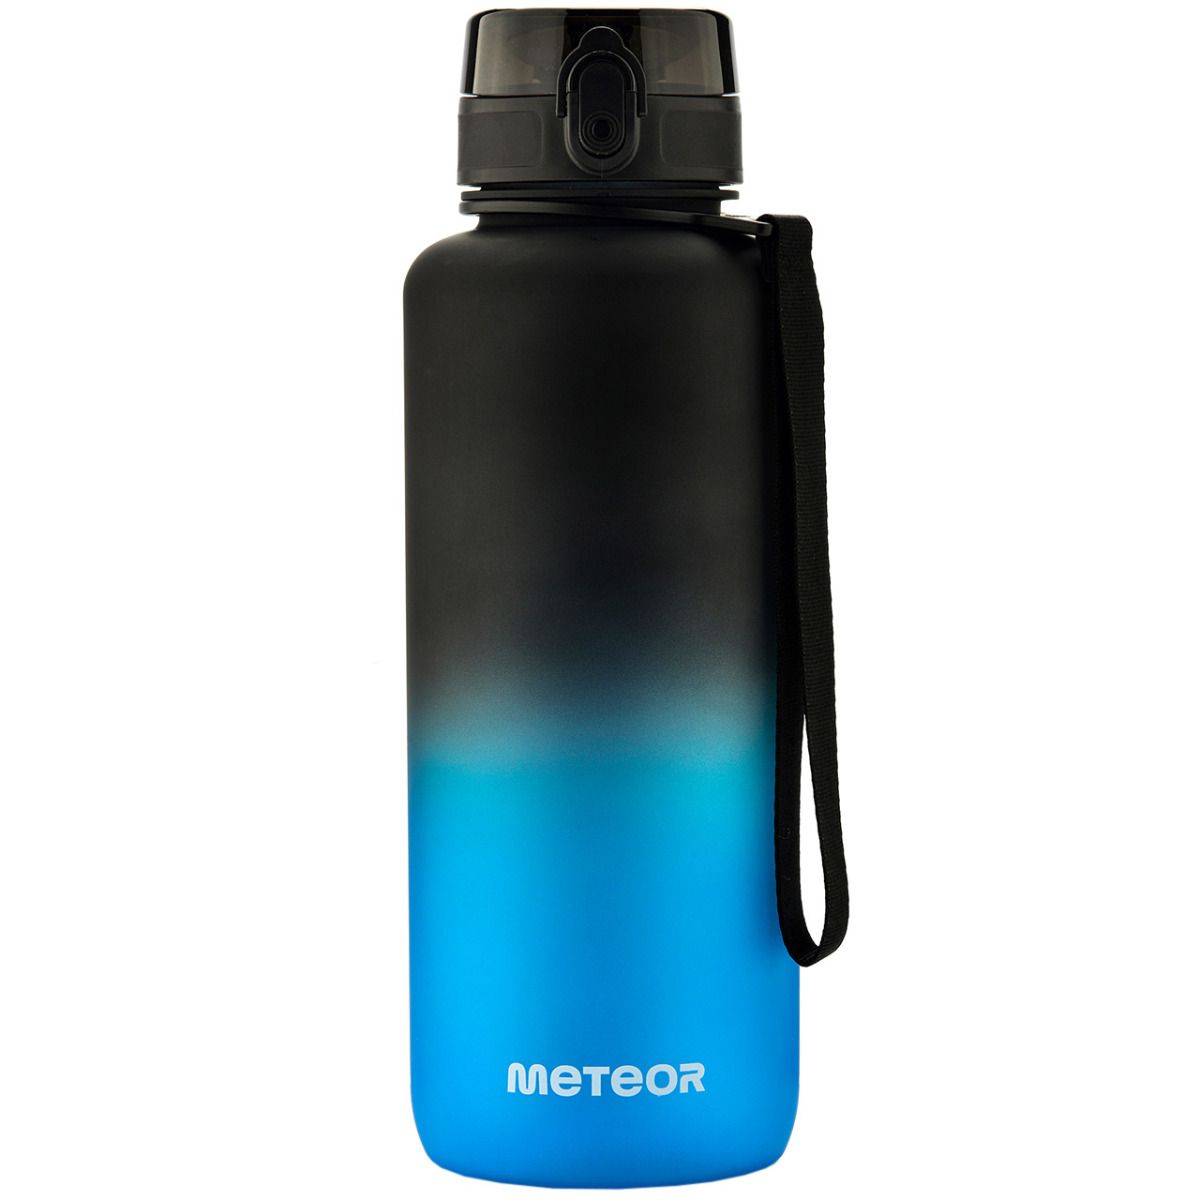 Meteor Sportovní lahev 1500 ml 10104